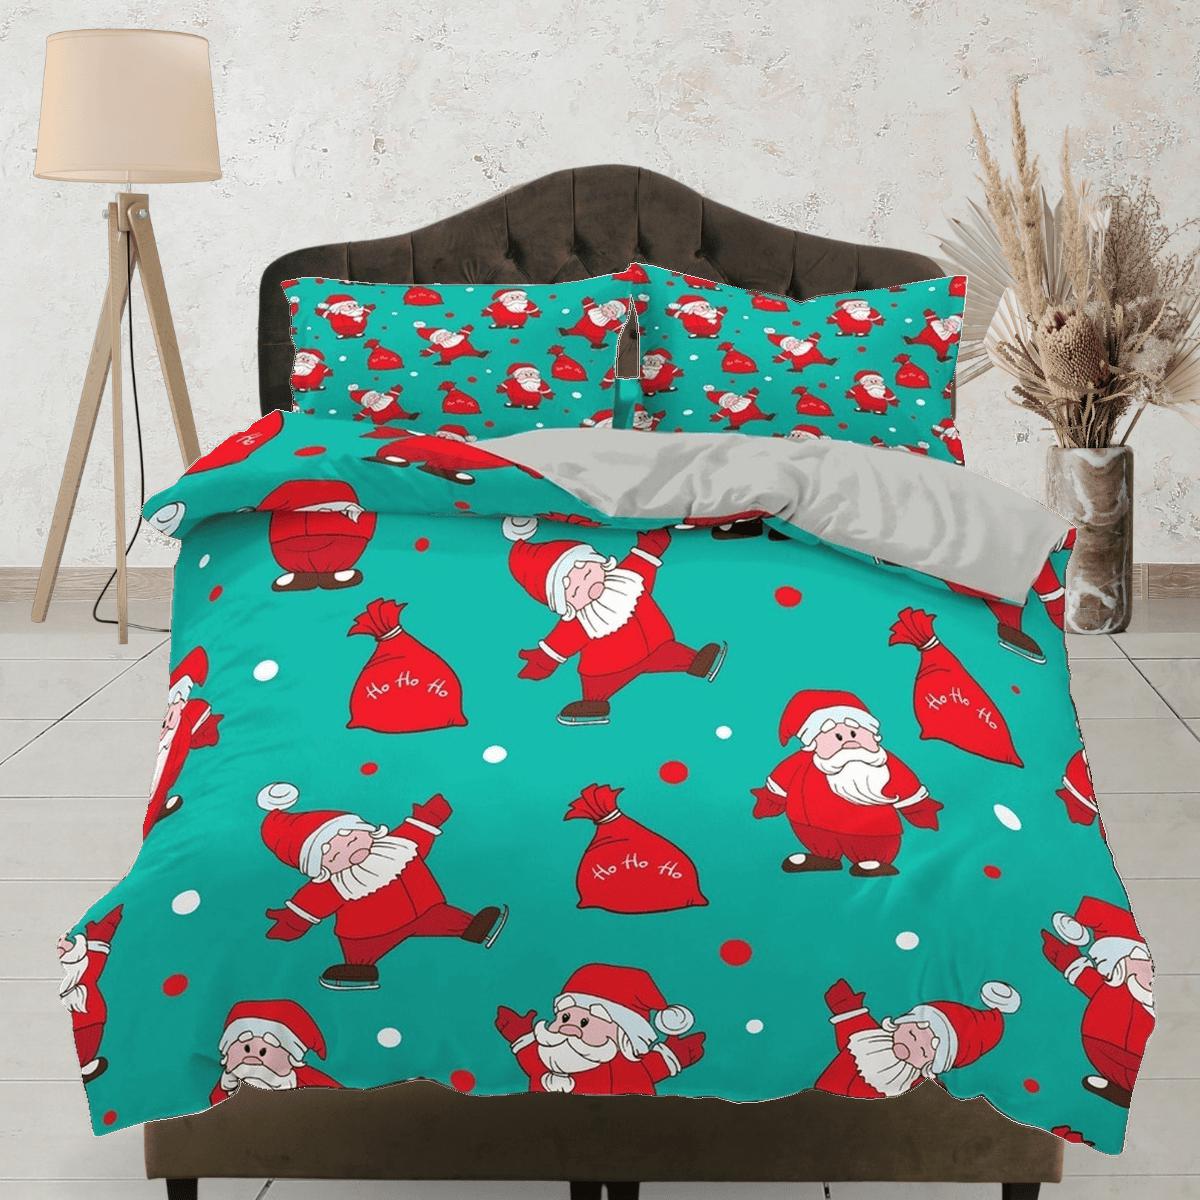 daintyduvet Cute Santa Claus pattern Christmas bedding pillowcase holiday gift sea green duvet cover king queen toddler bedding baby Christmas farmhouse